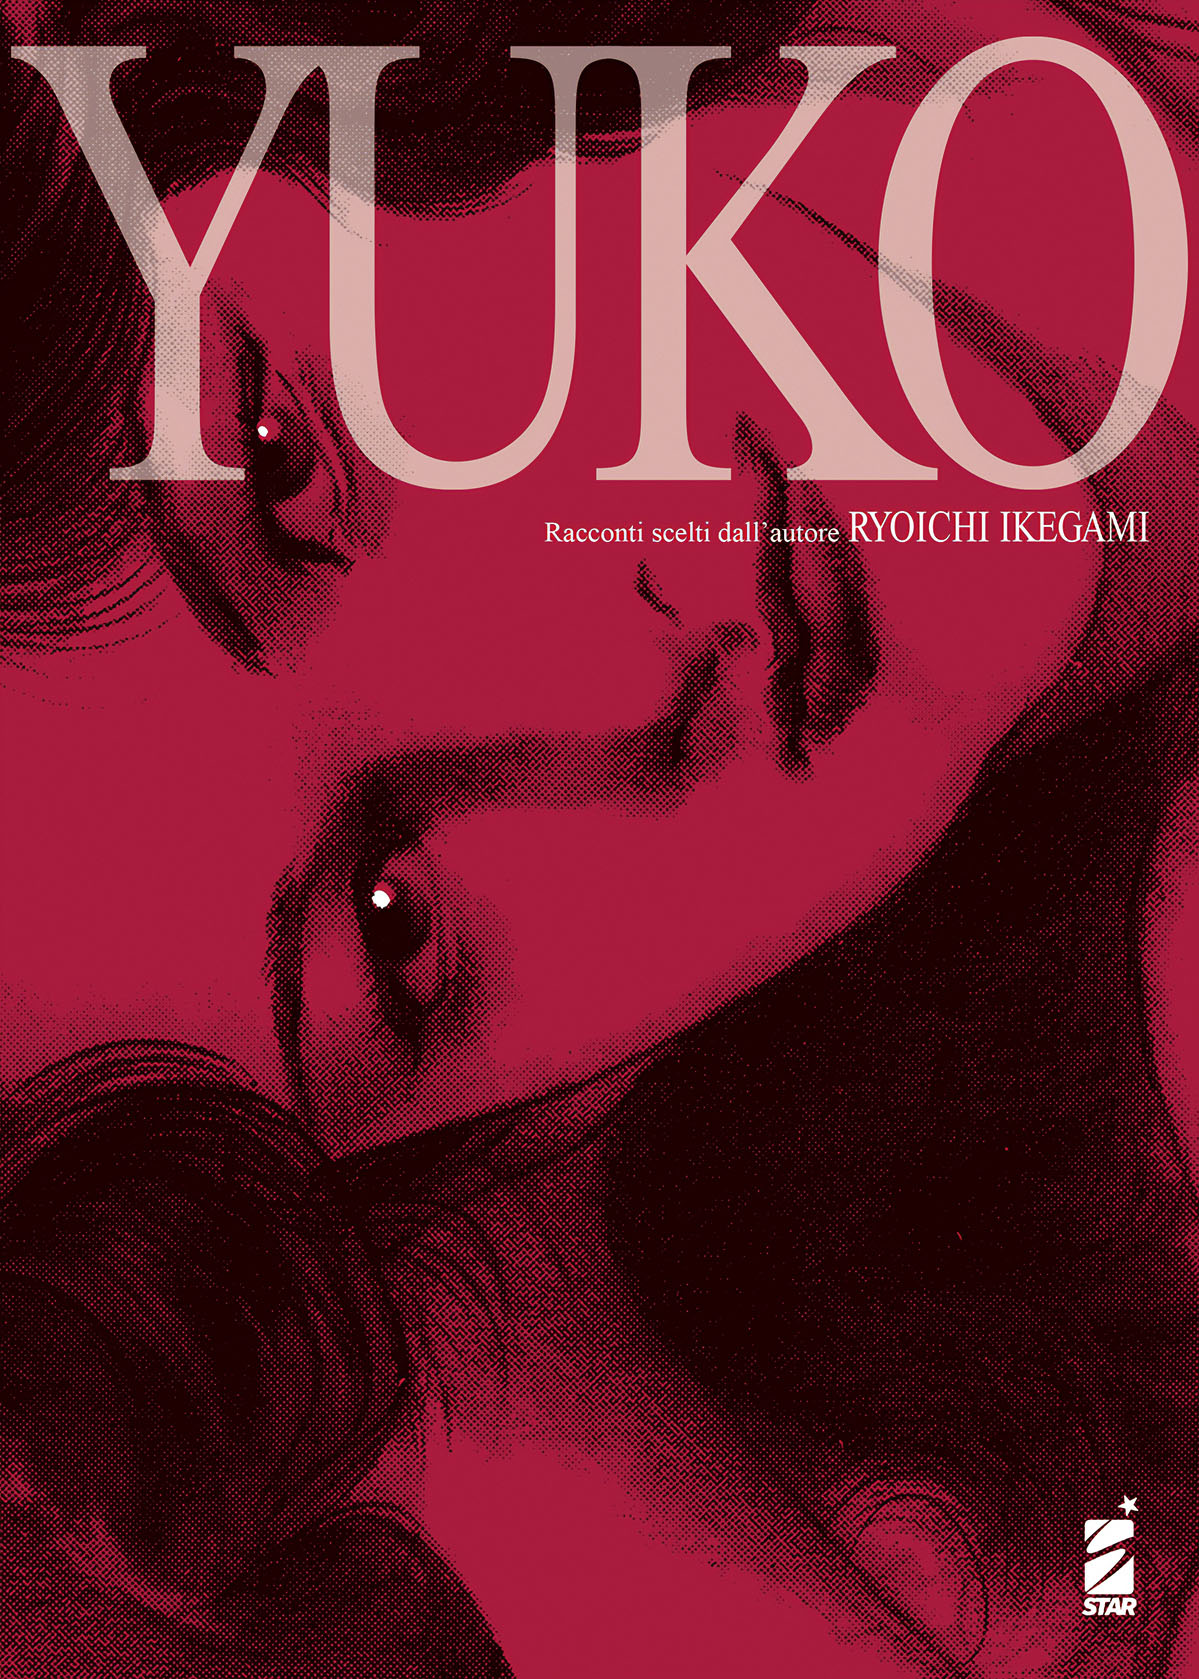 Yuko recensione